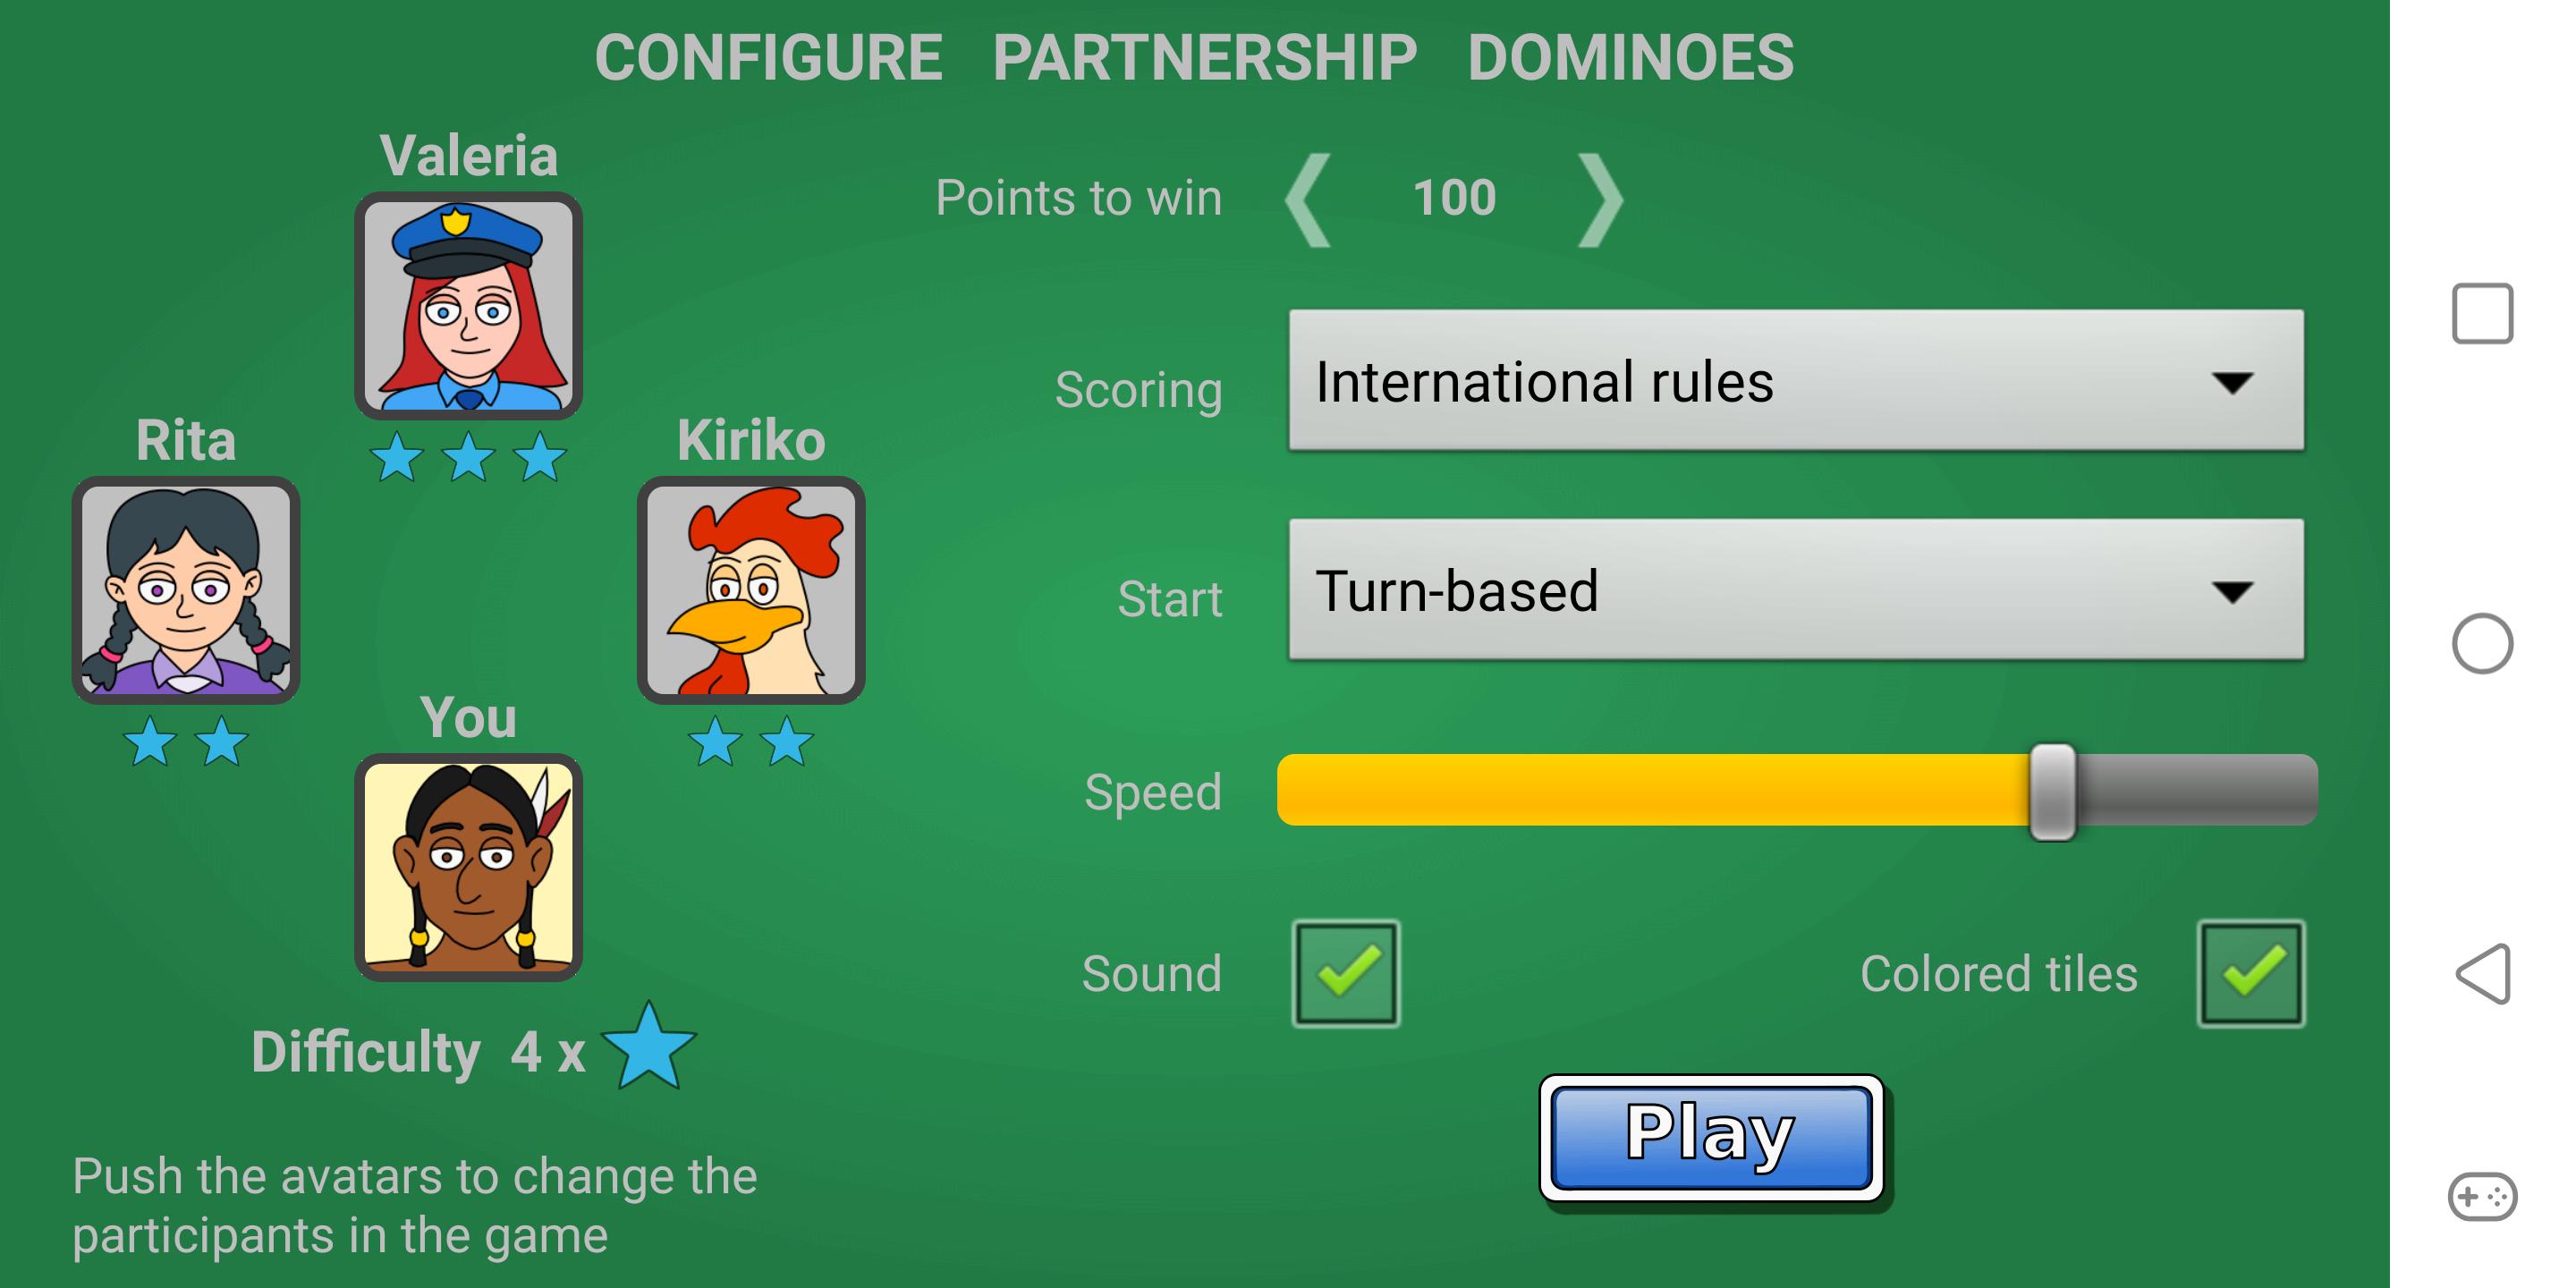 Partnership Dominoes 1.7.2 Screenshot 7